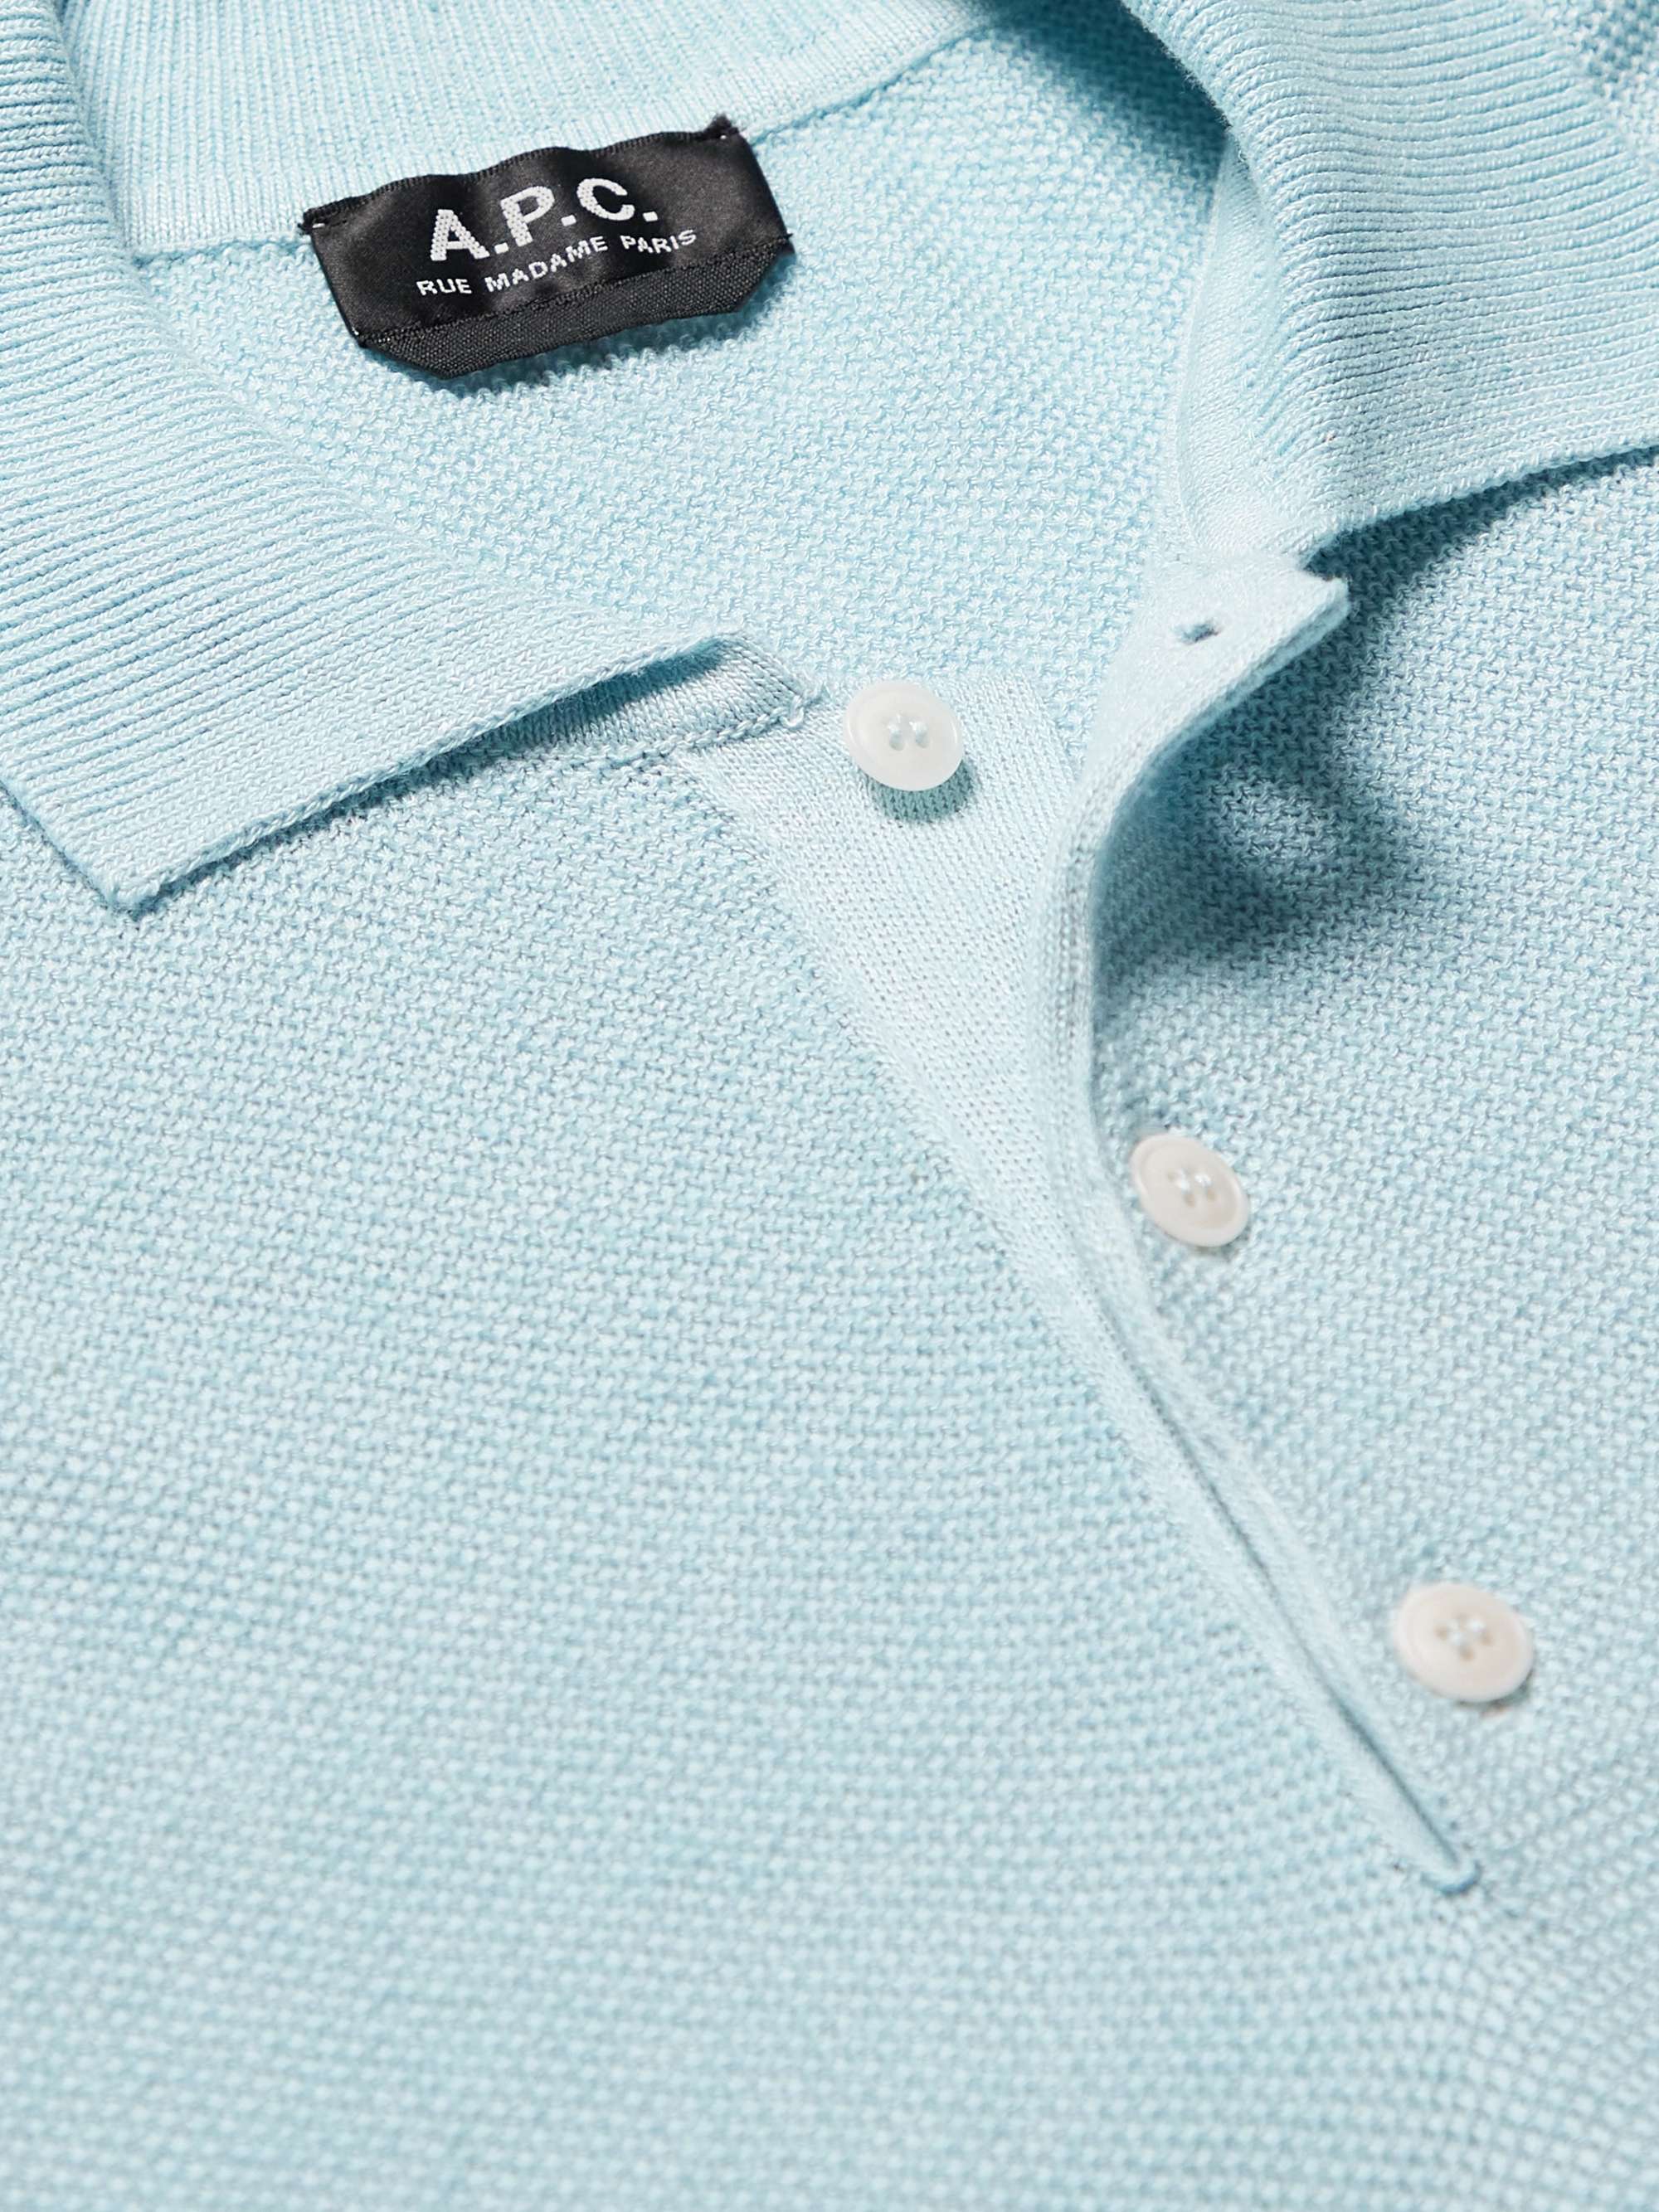 A.P.C. Jude Slim-Fit Piqué-Knit Polo Shirt